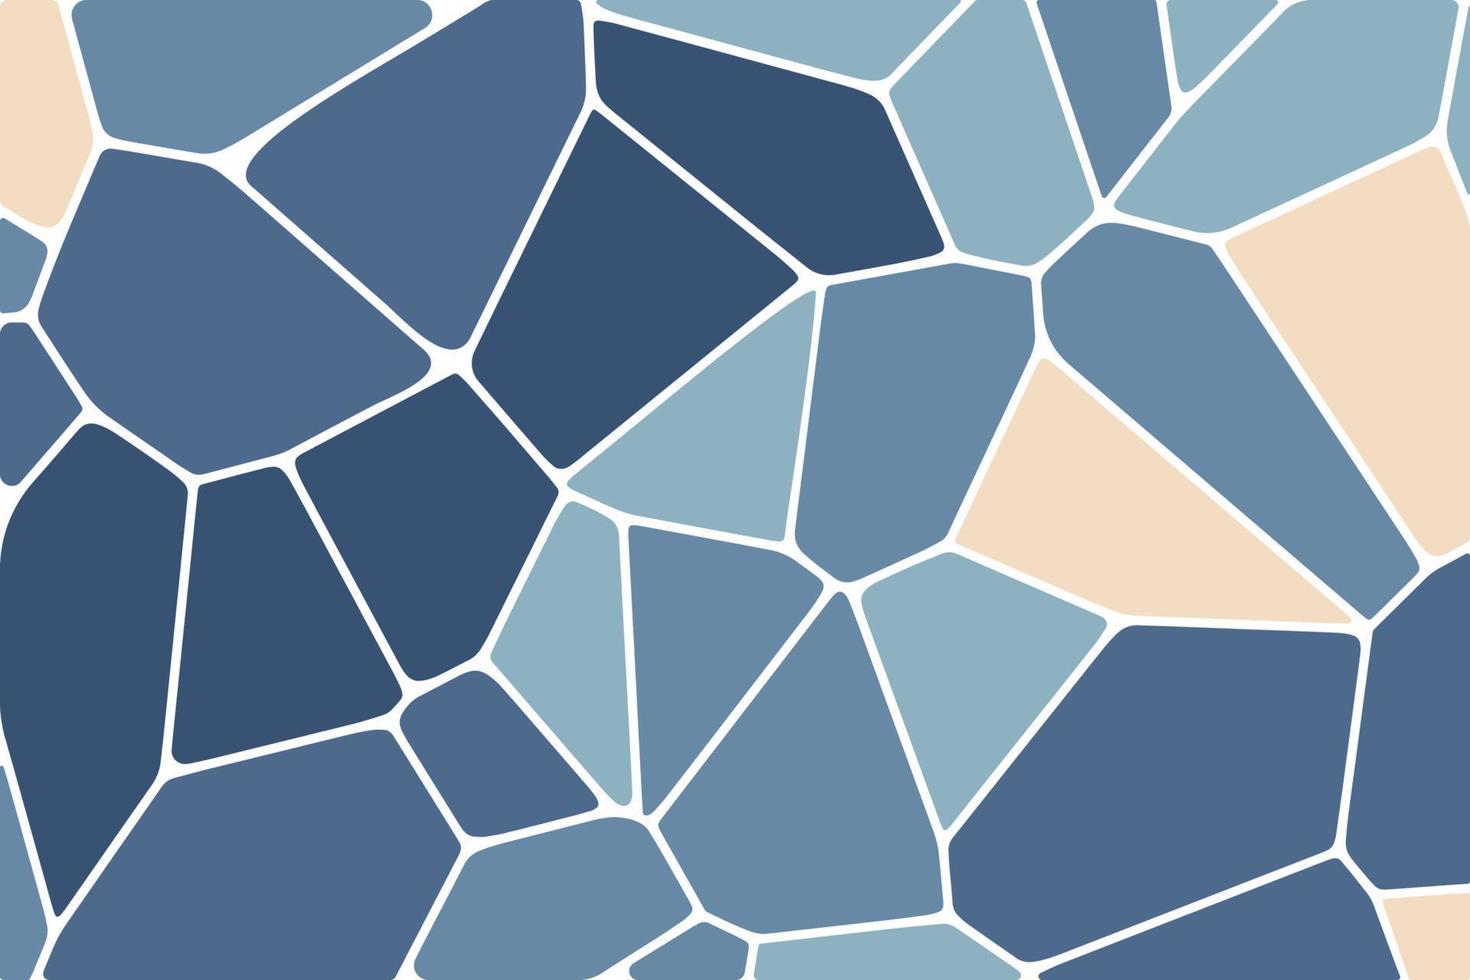 rena och moderna trasiga former geometrisk illustration. abstrakt blå voronoi diagram bakgrundsdesign vektor